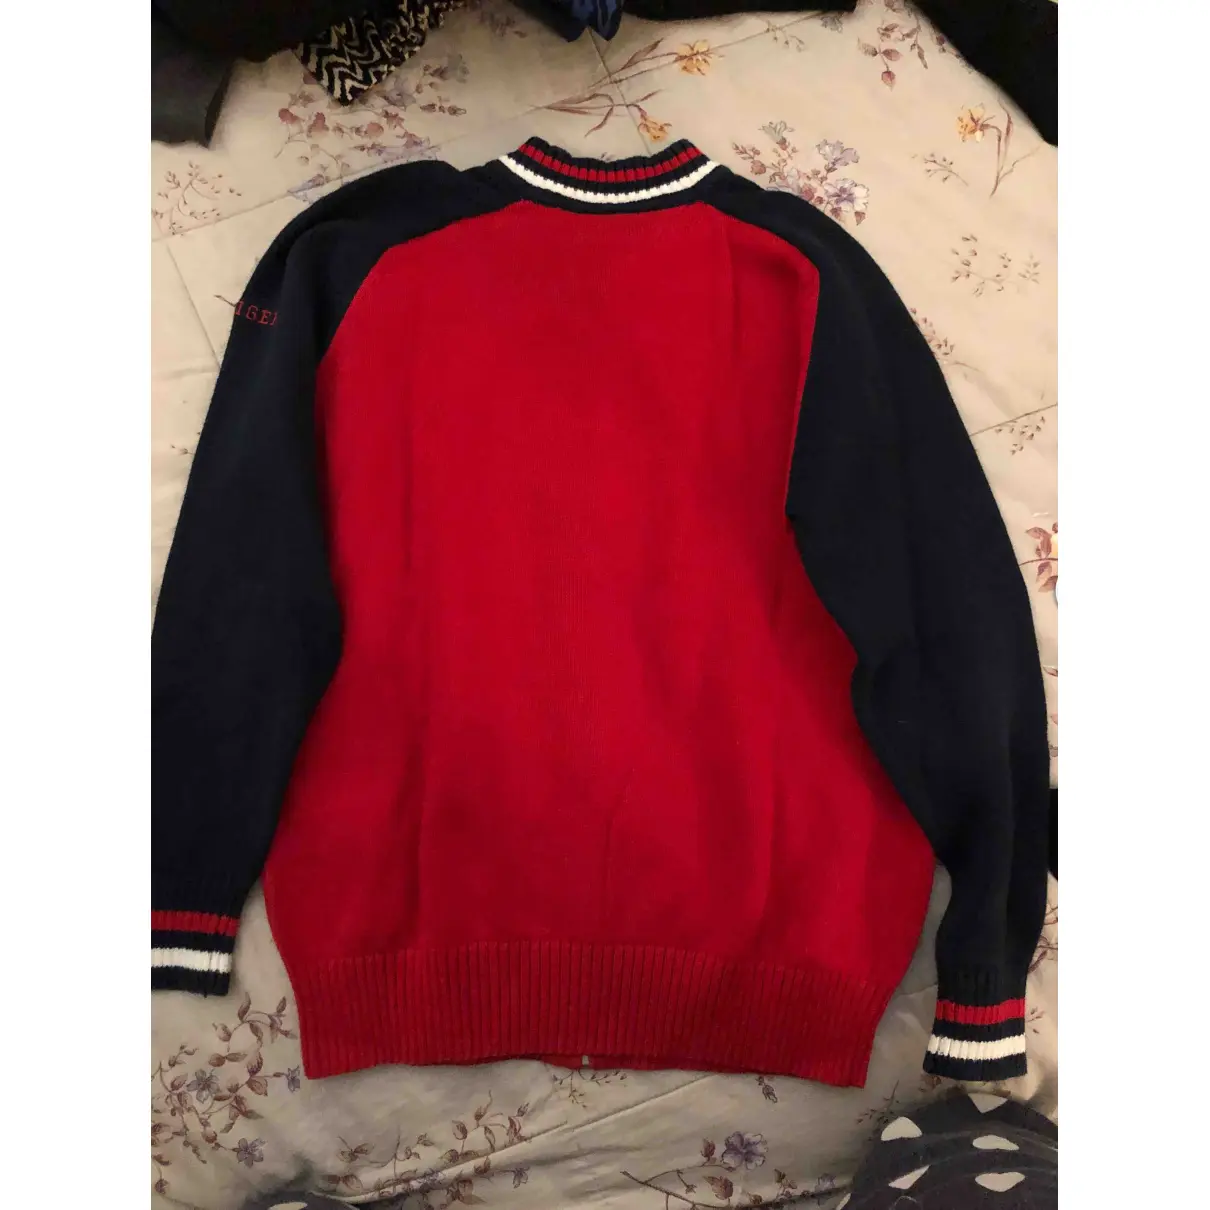 Buy Tommy Hilfiger Sweater online